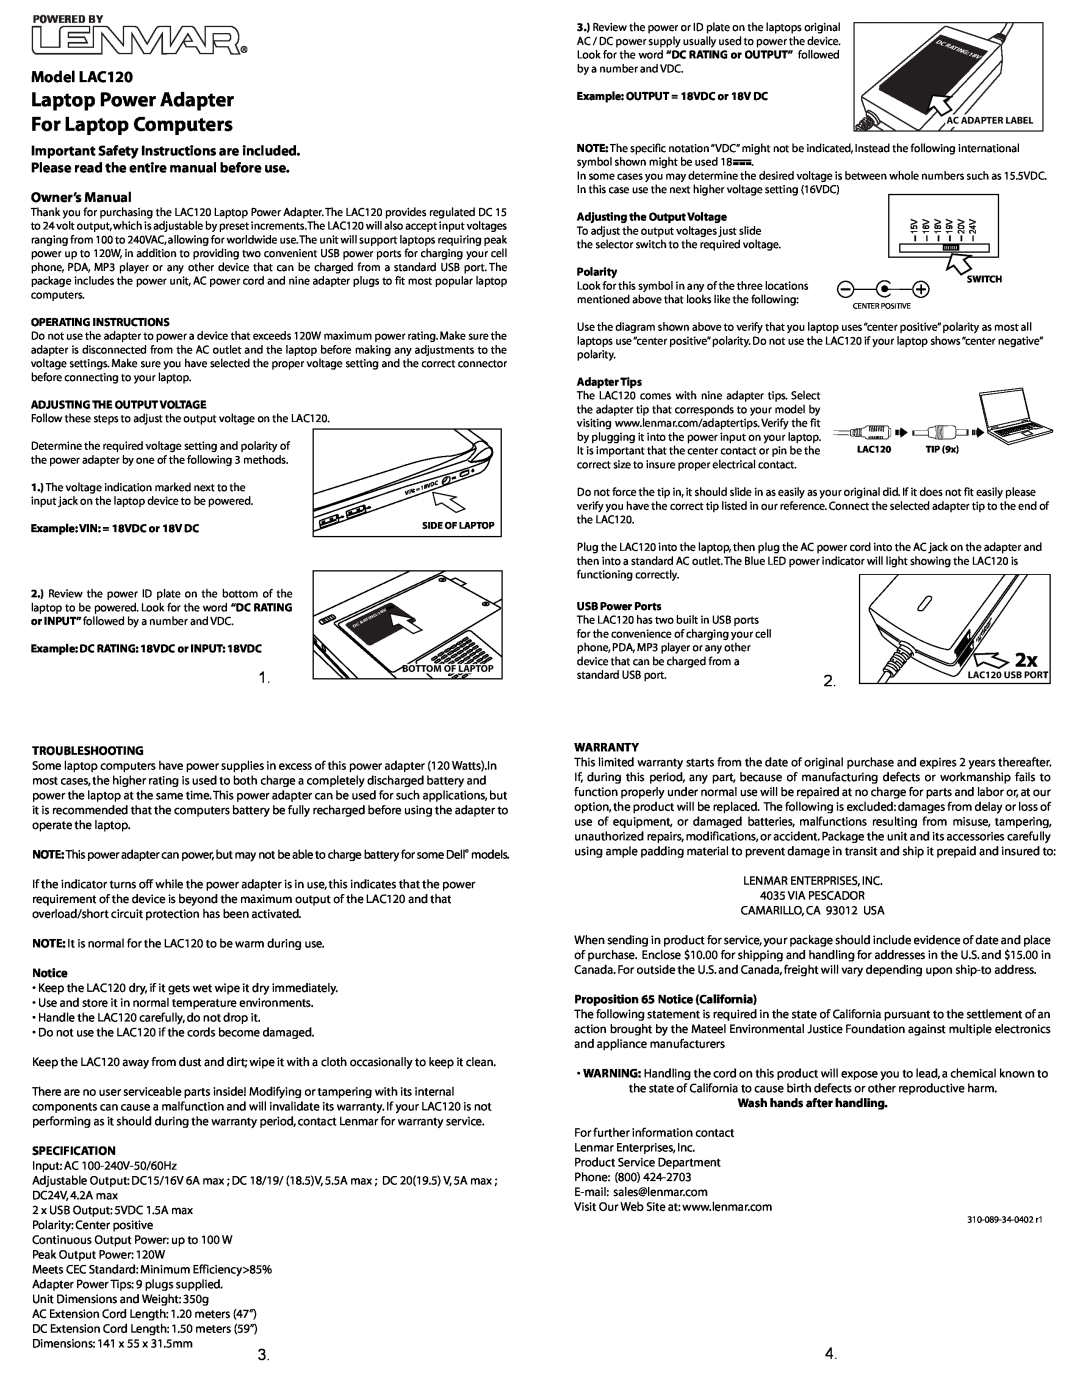 Lenmar Enterprises important safety instructions Laptop Power Adapter For Laptop Computers, Model LAC120 